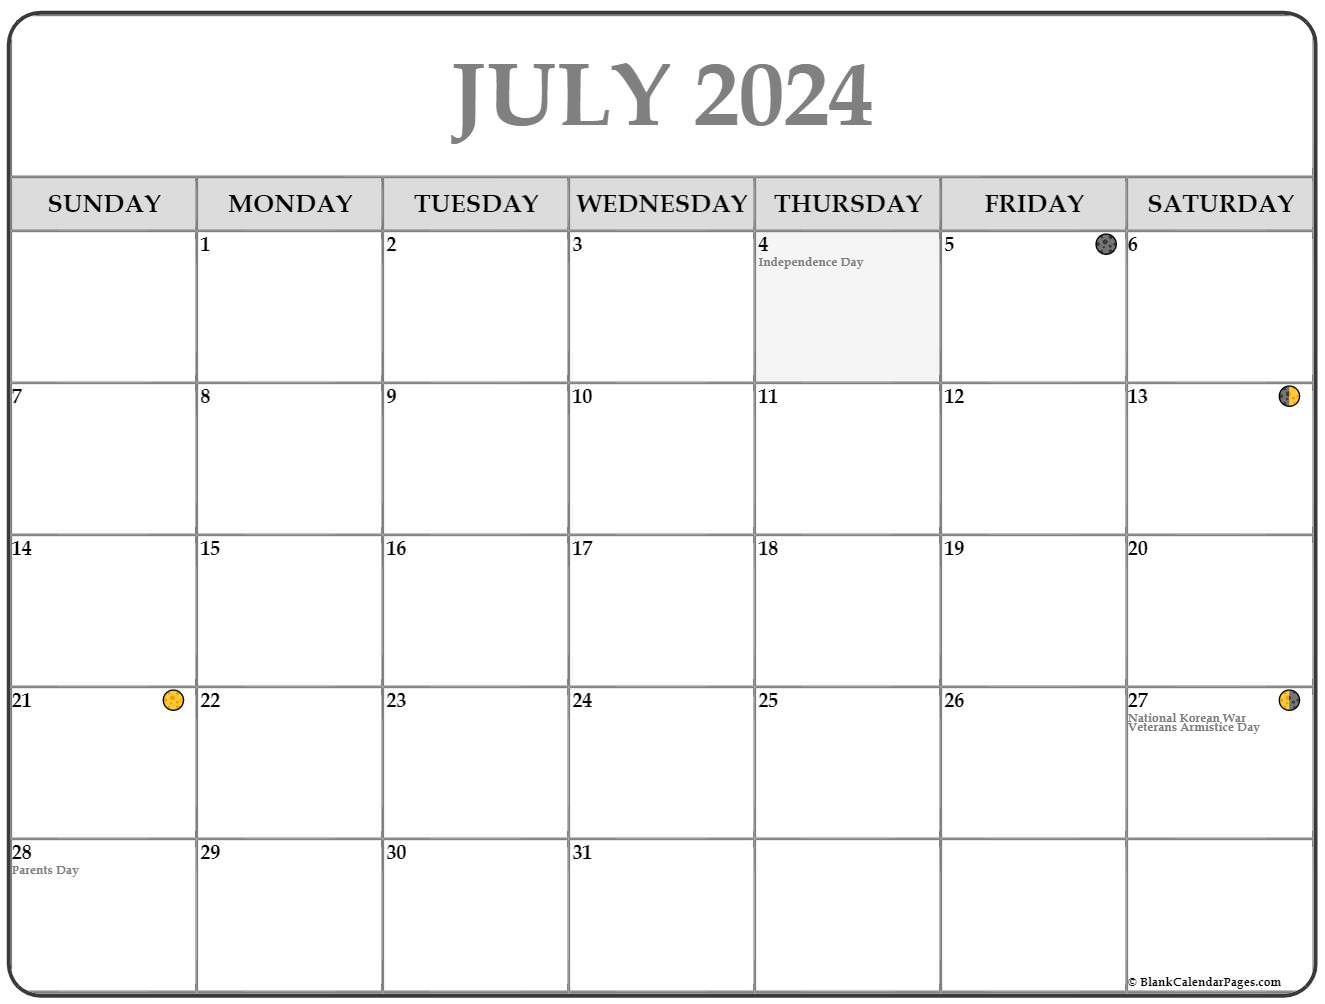 July 2024 Lunar Calendar | Moon Phase Calendar | Moon Phase Calendar July 2024